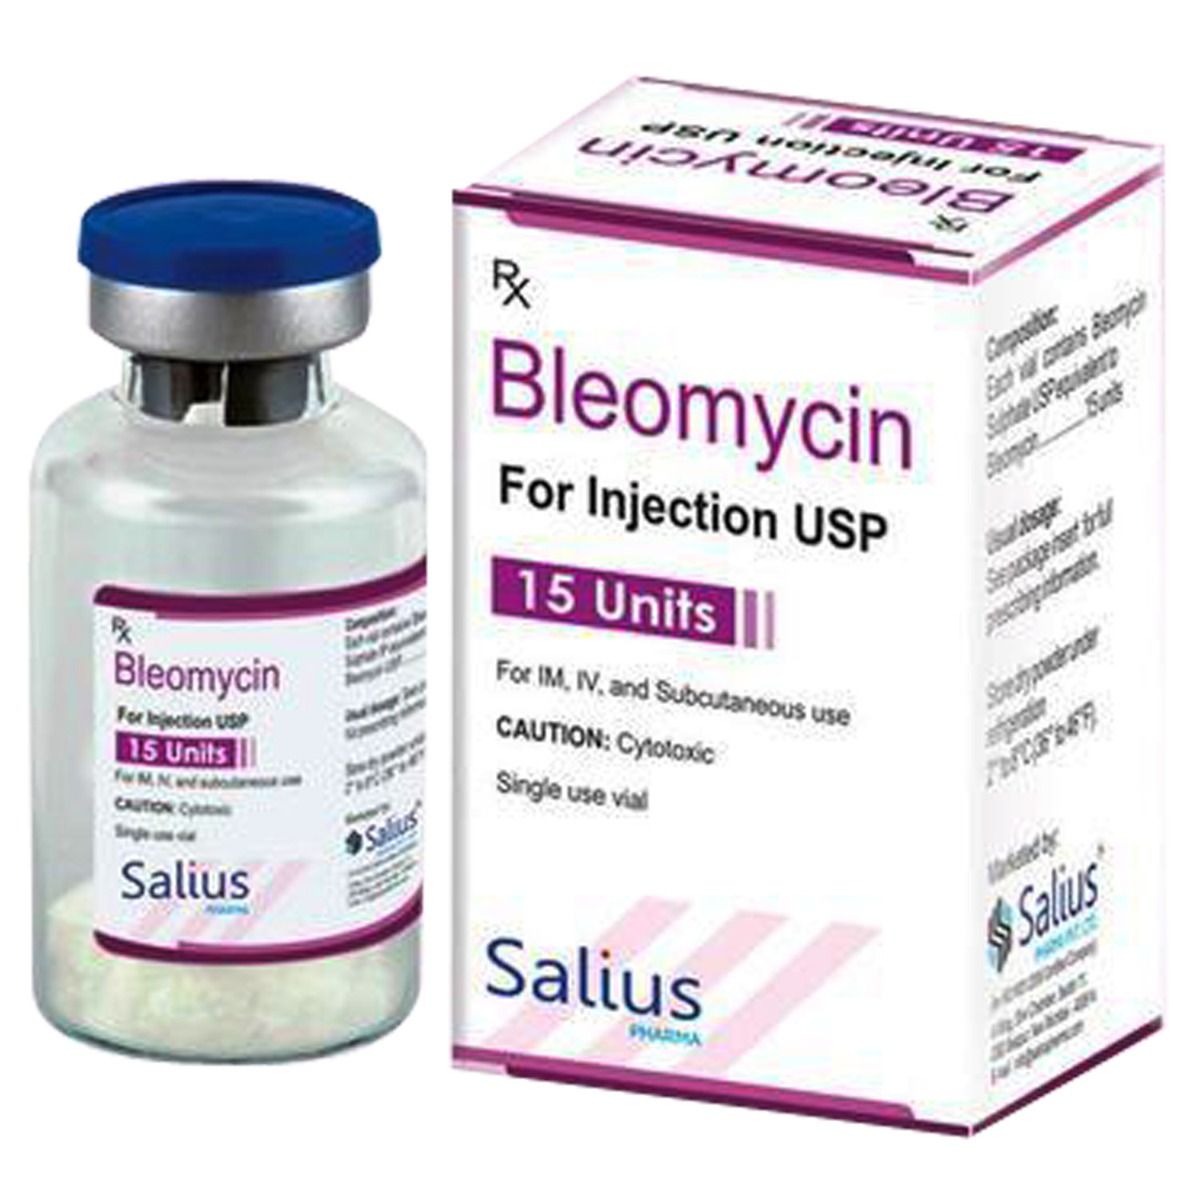 Buy Bleomycin Injection Online